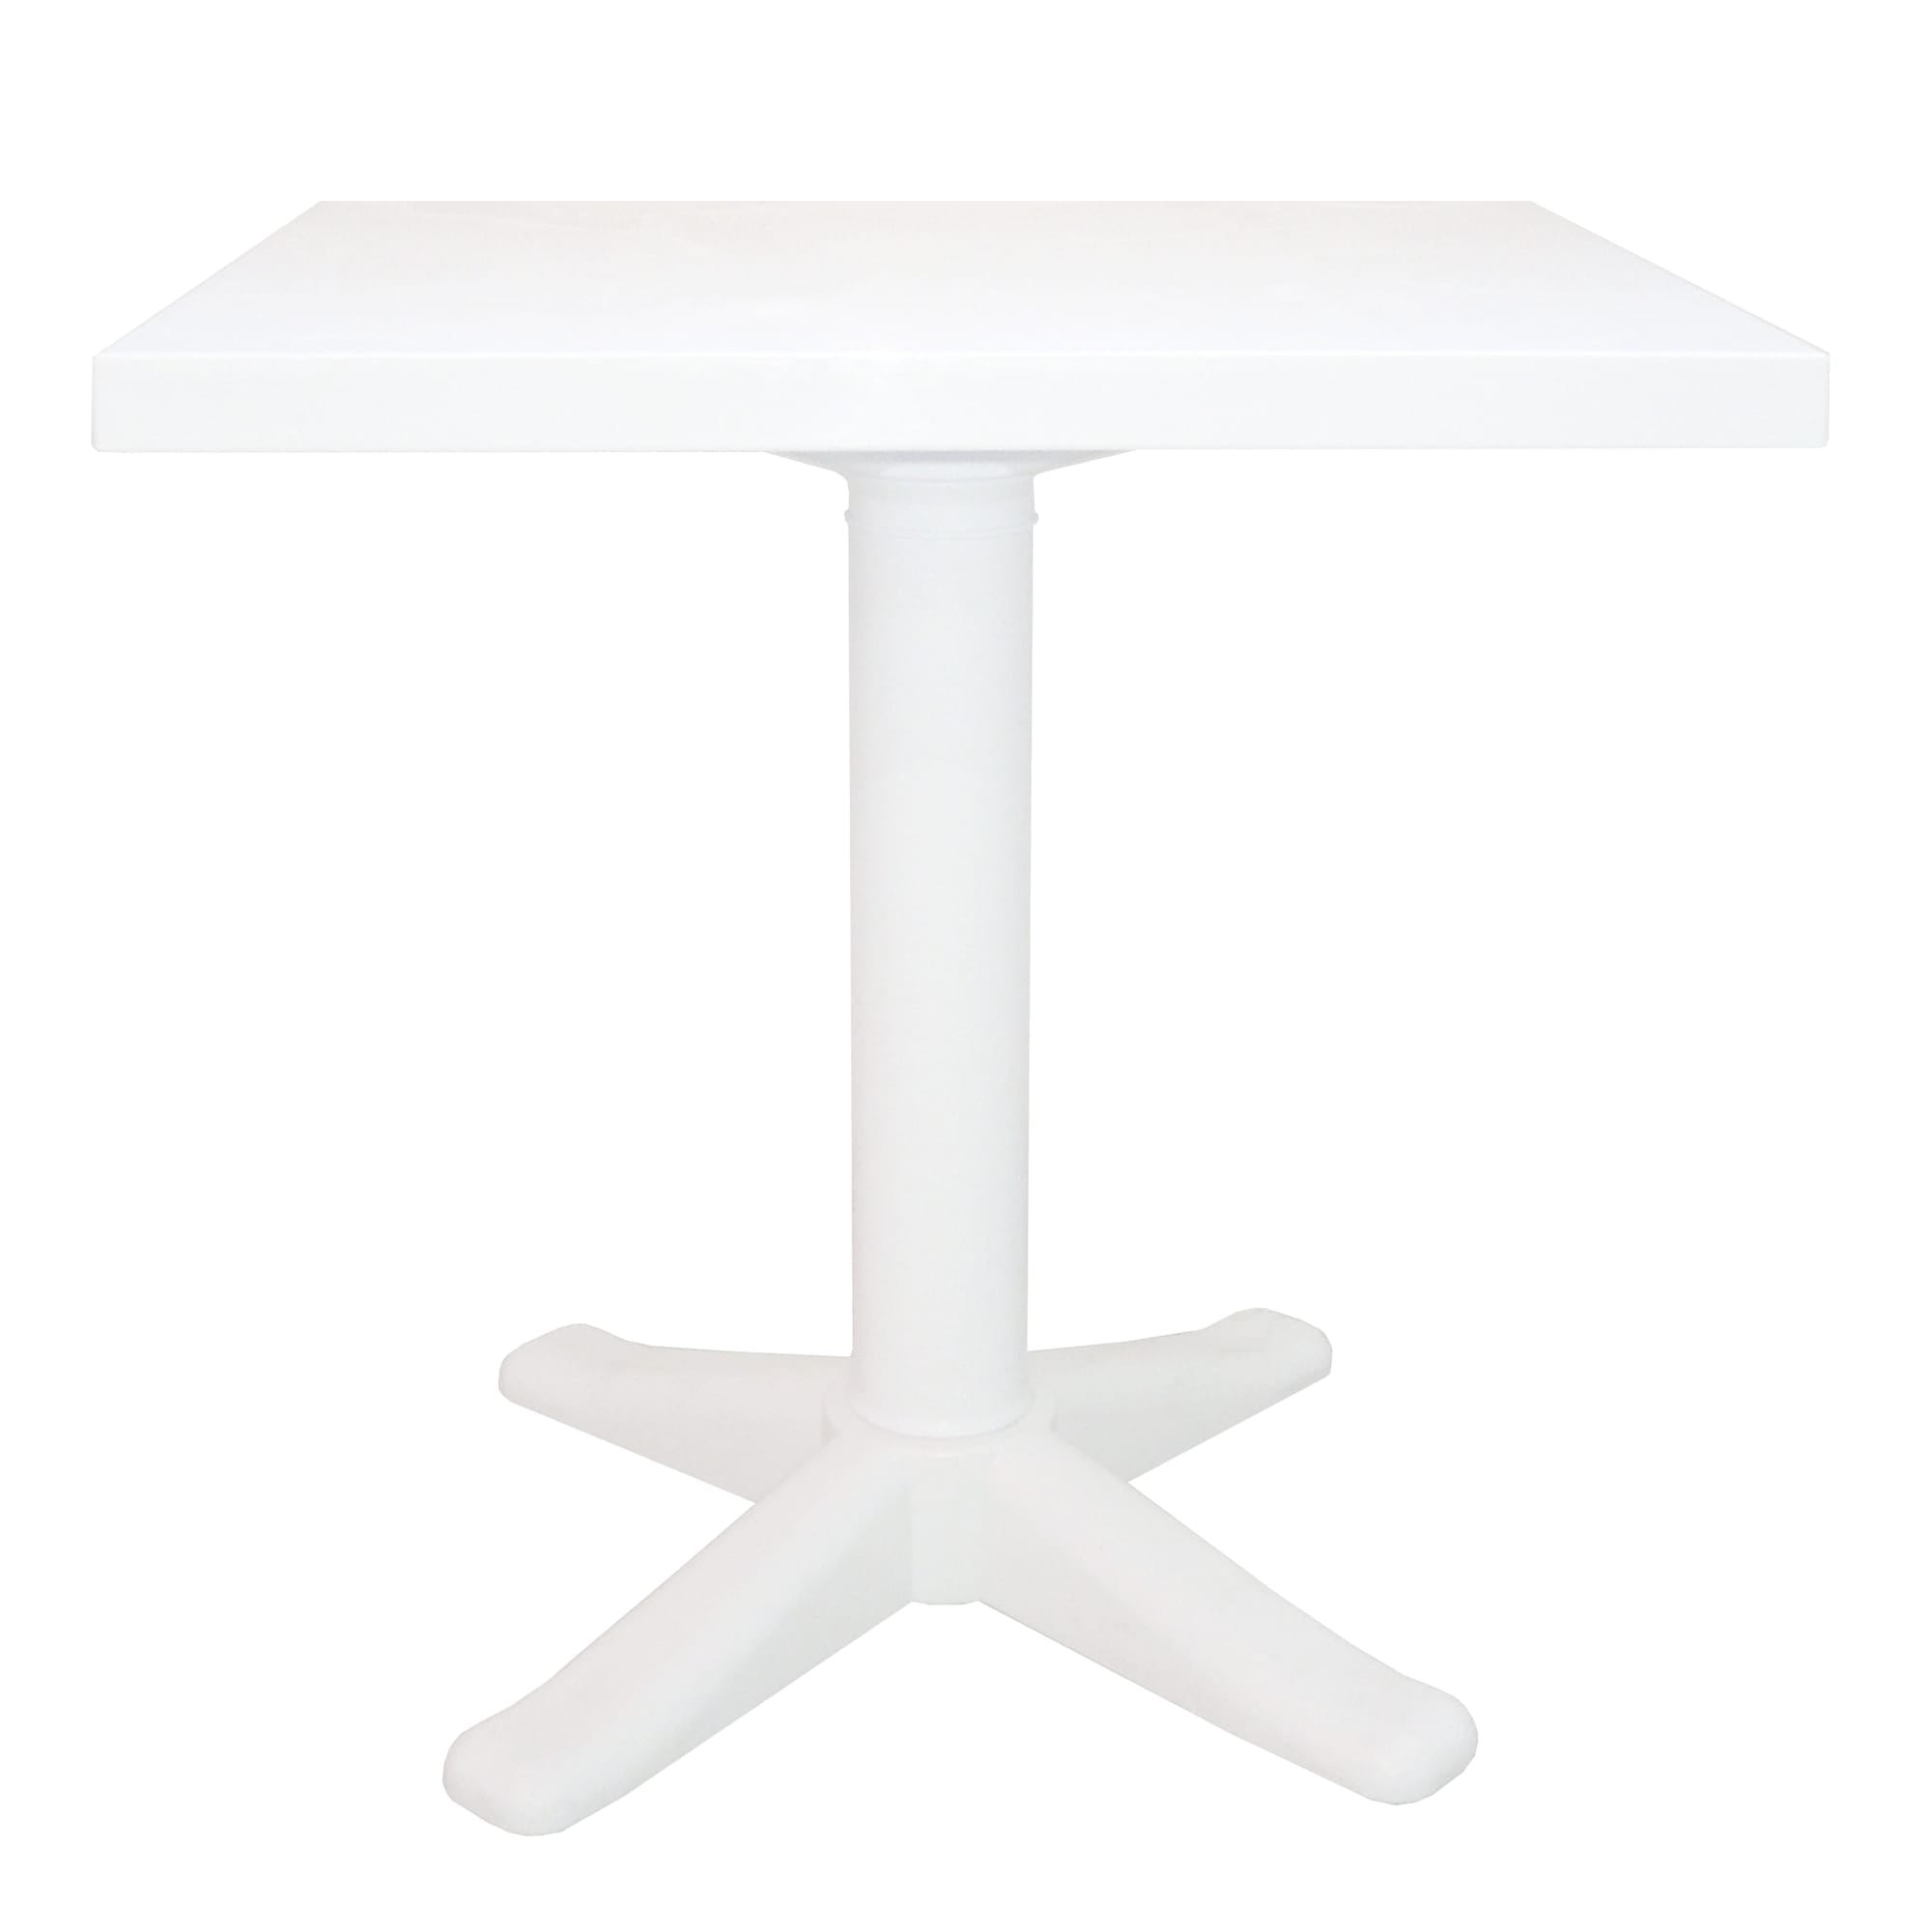 Garbar esculapi vierkante tafel buiten 70x70 wit